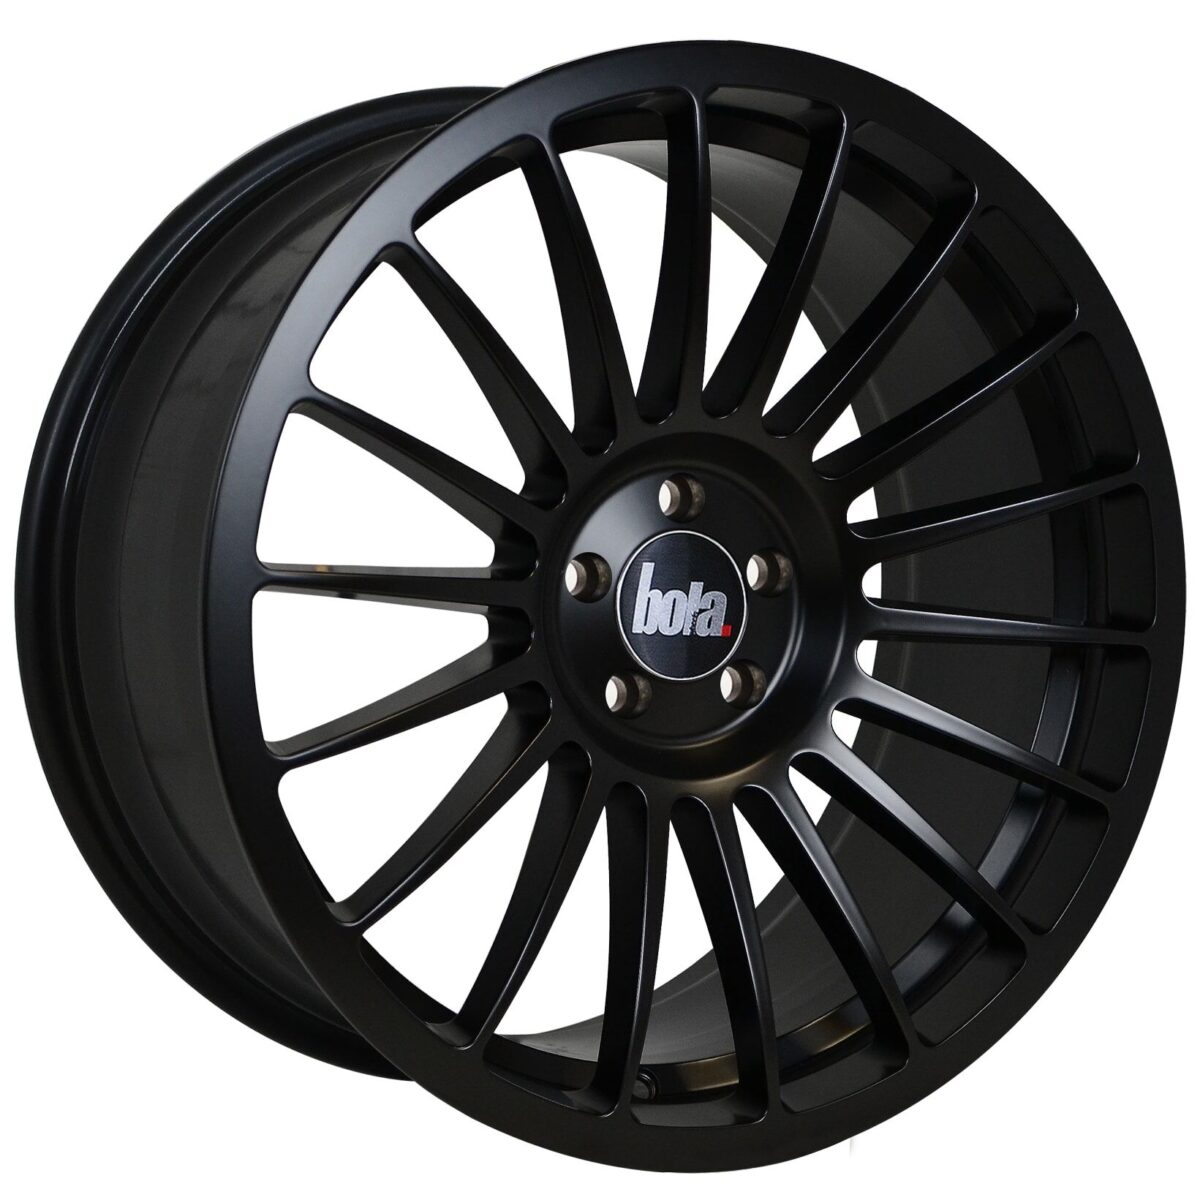 18" BOLA B14 Wheels - Matt Black - VW / Audi / Mercedes - 5x112